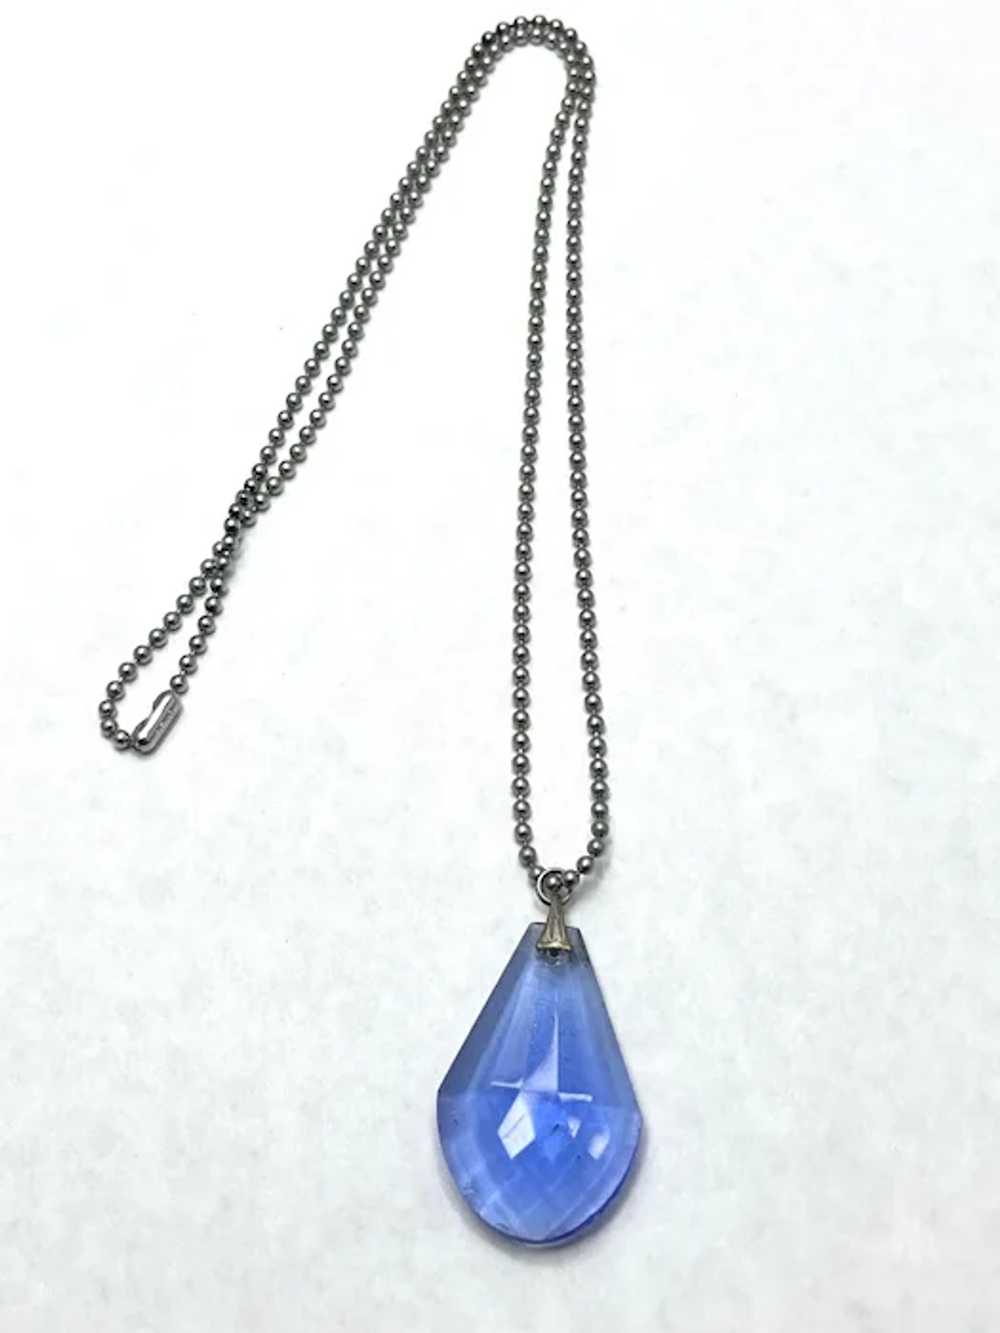 Vintage Blue Glass Faceted Pendant Necklace - image 3